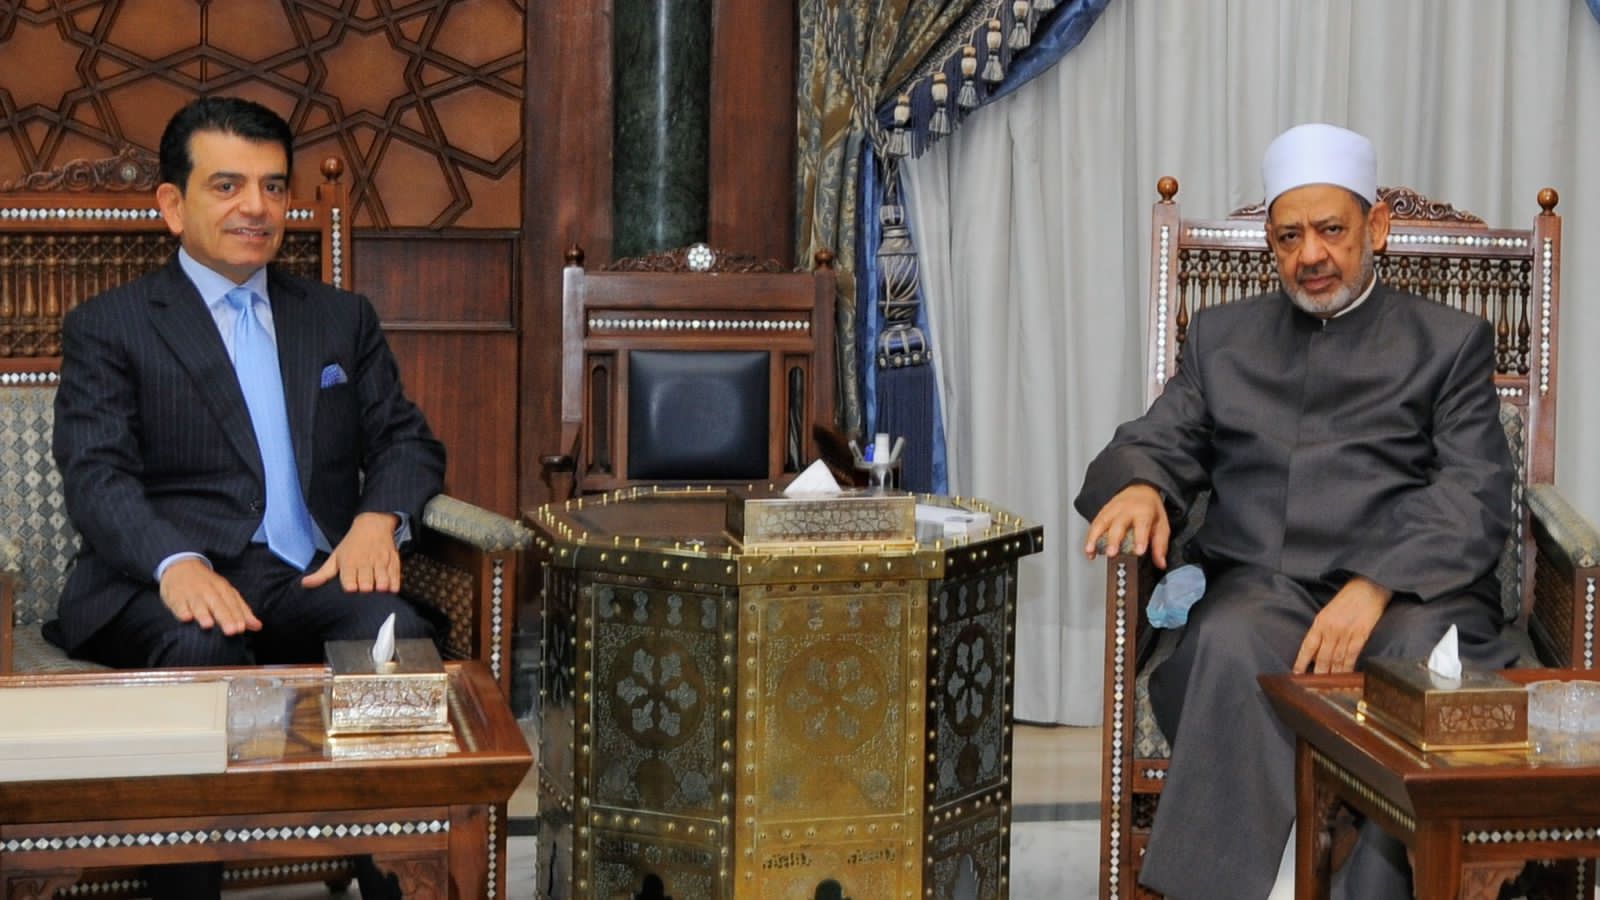 ICESCO Director-General Meets with Grand Imam of Al-Azhar